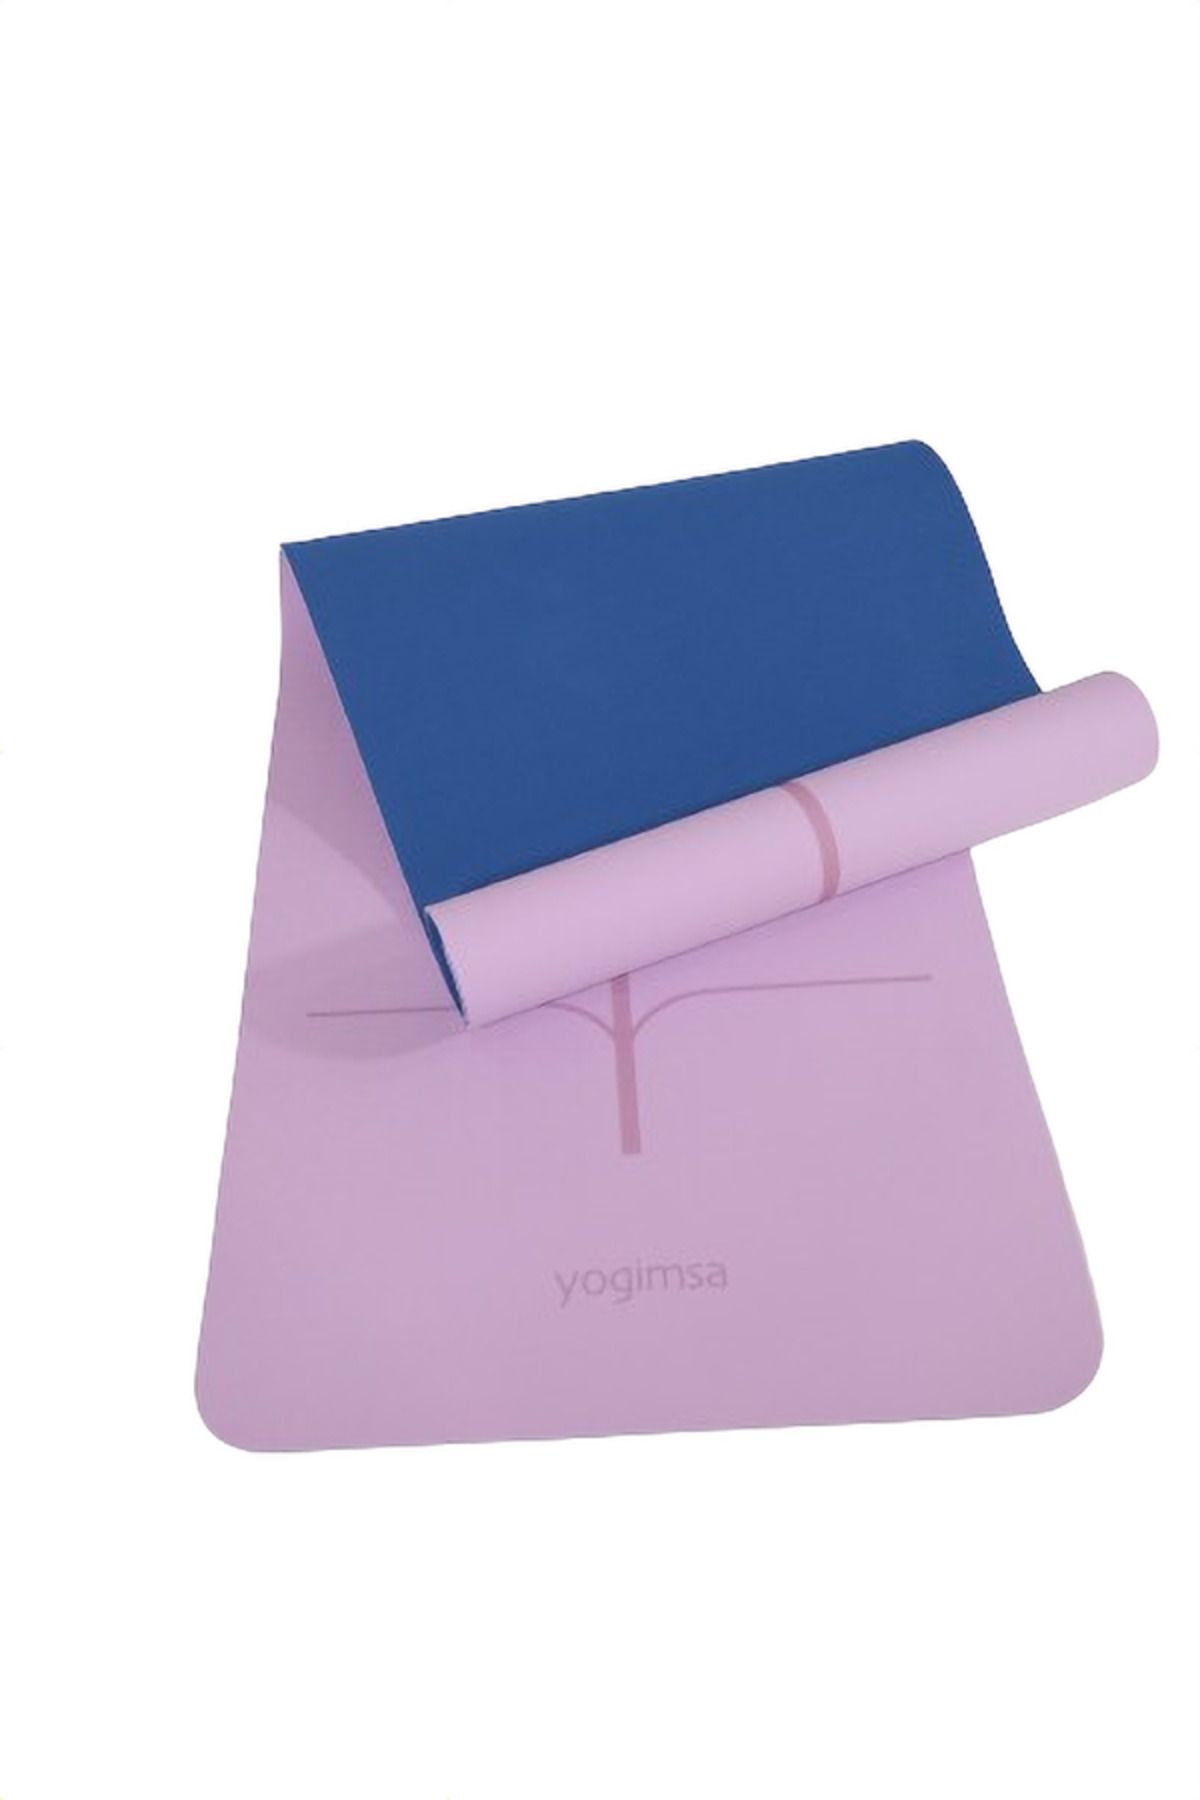 Yogimsa MantaRay Studio Series Coral-Navy Blue-6mm Yoga ve Pilates Matı